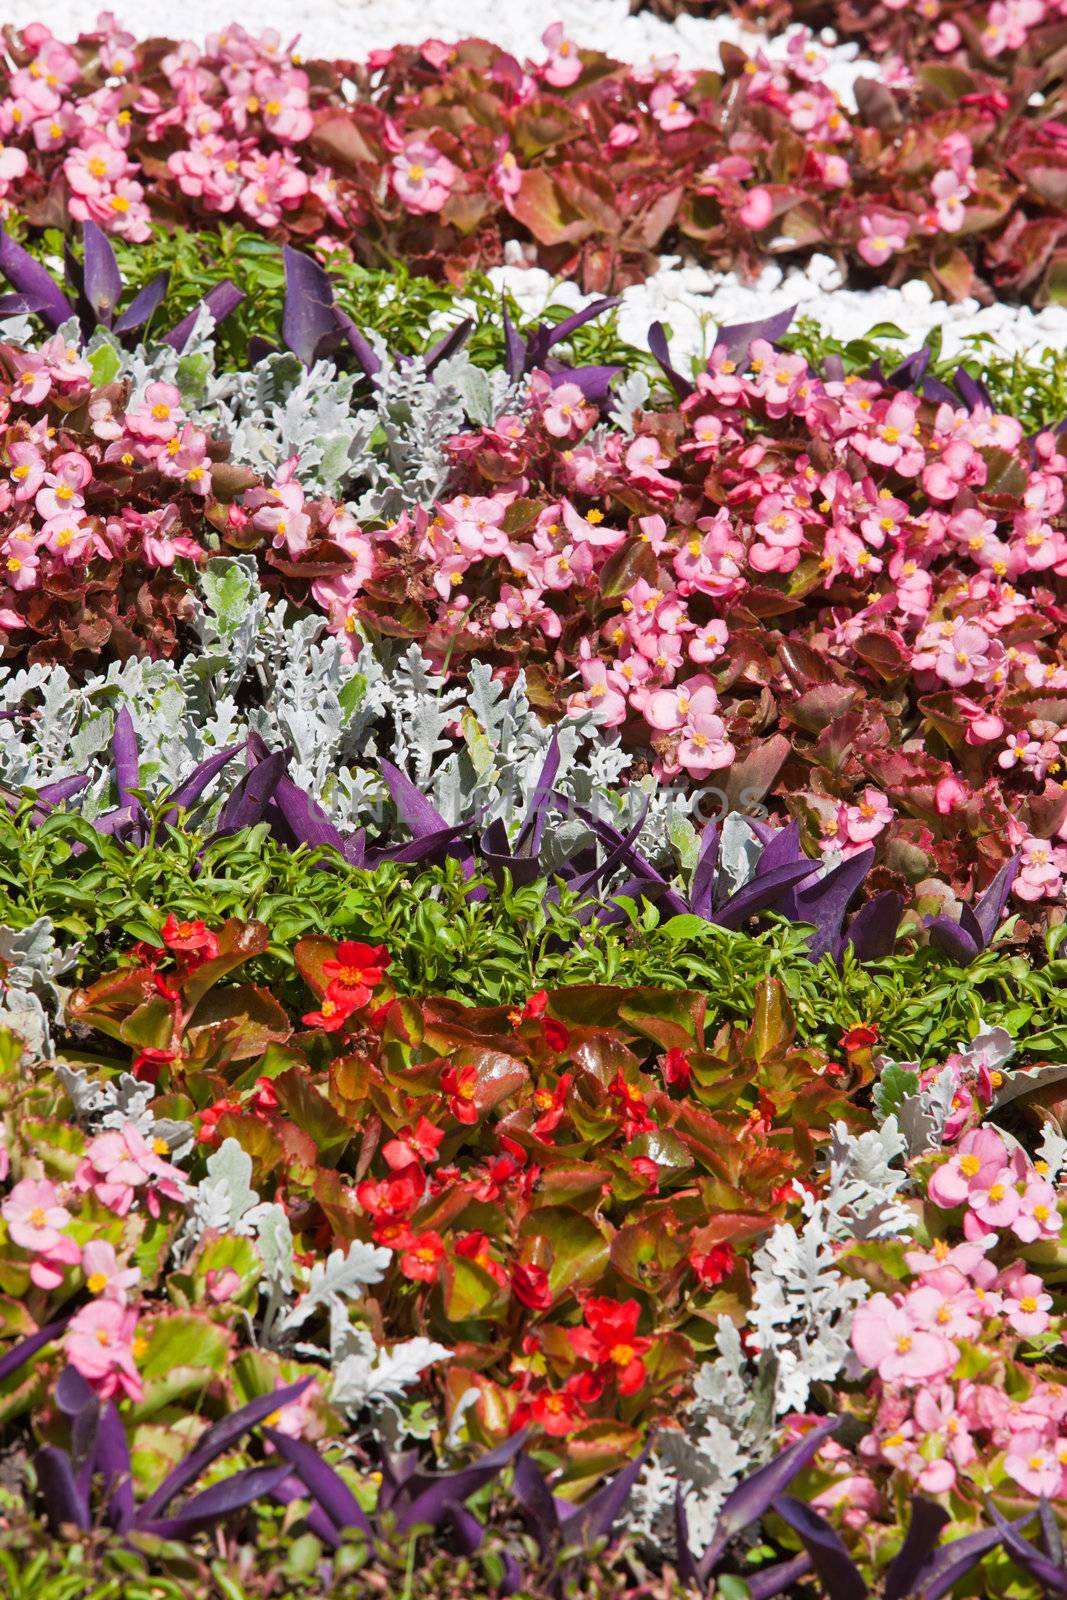 nature series: fresh flower outdoor design texture